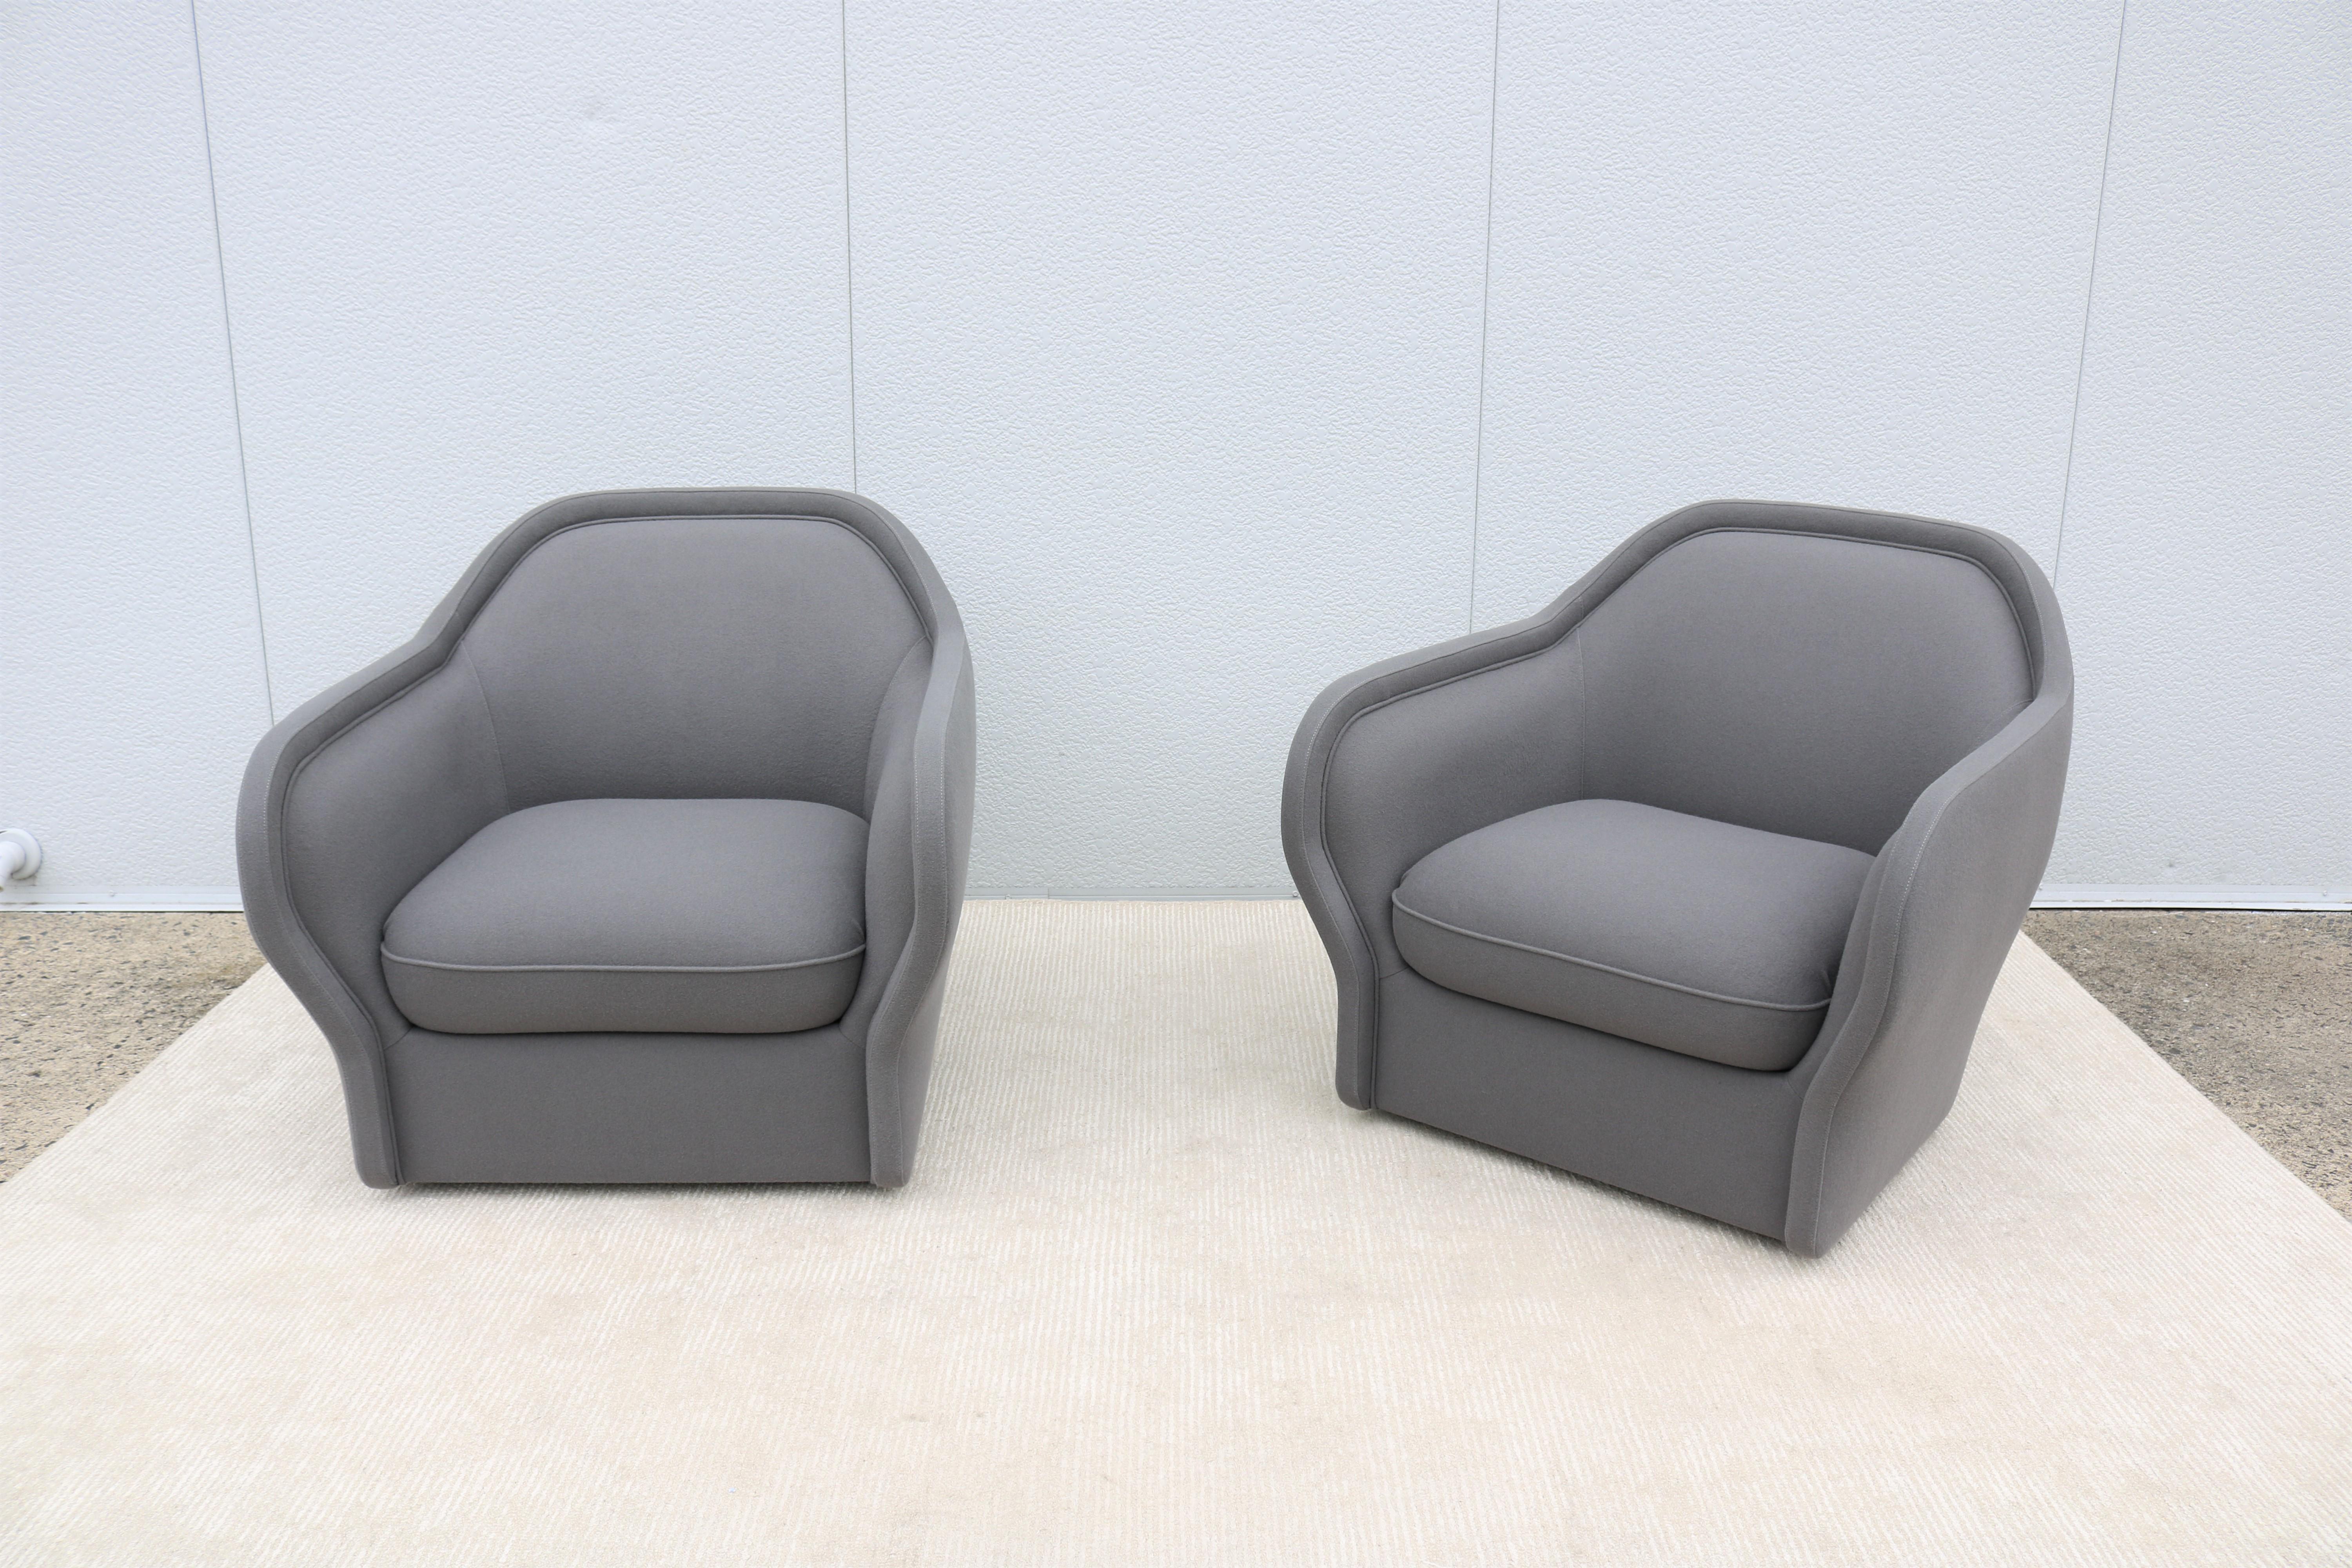 American Modern Jaime Hayon for Bernhardt Design Bardot Gray Lounge Chairs, a Pair